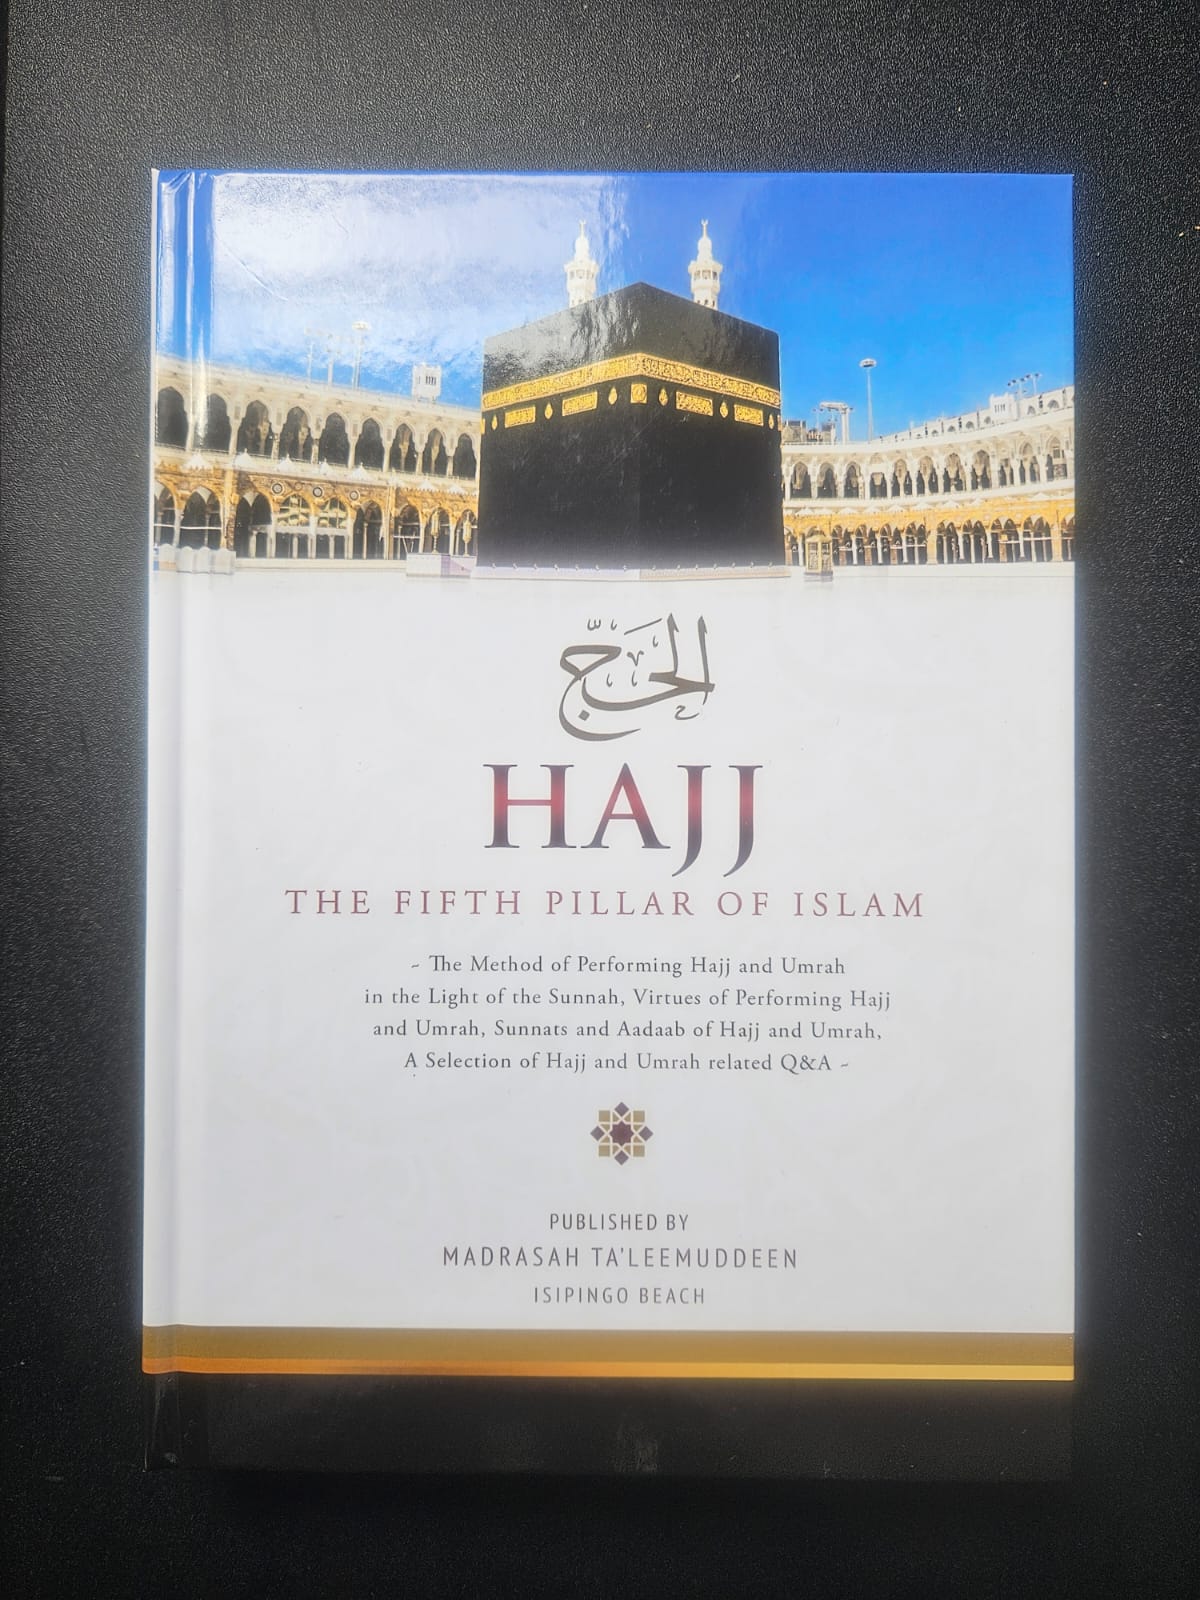 Hajj The Fifth Pillar of Islam